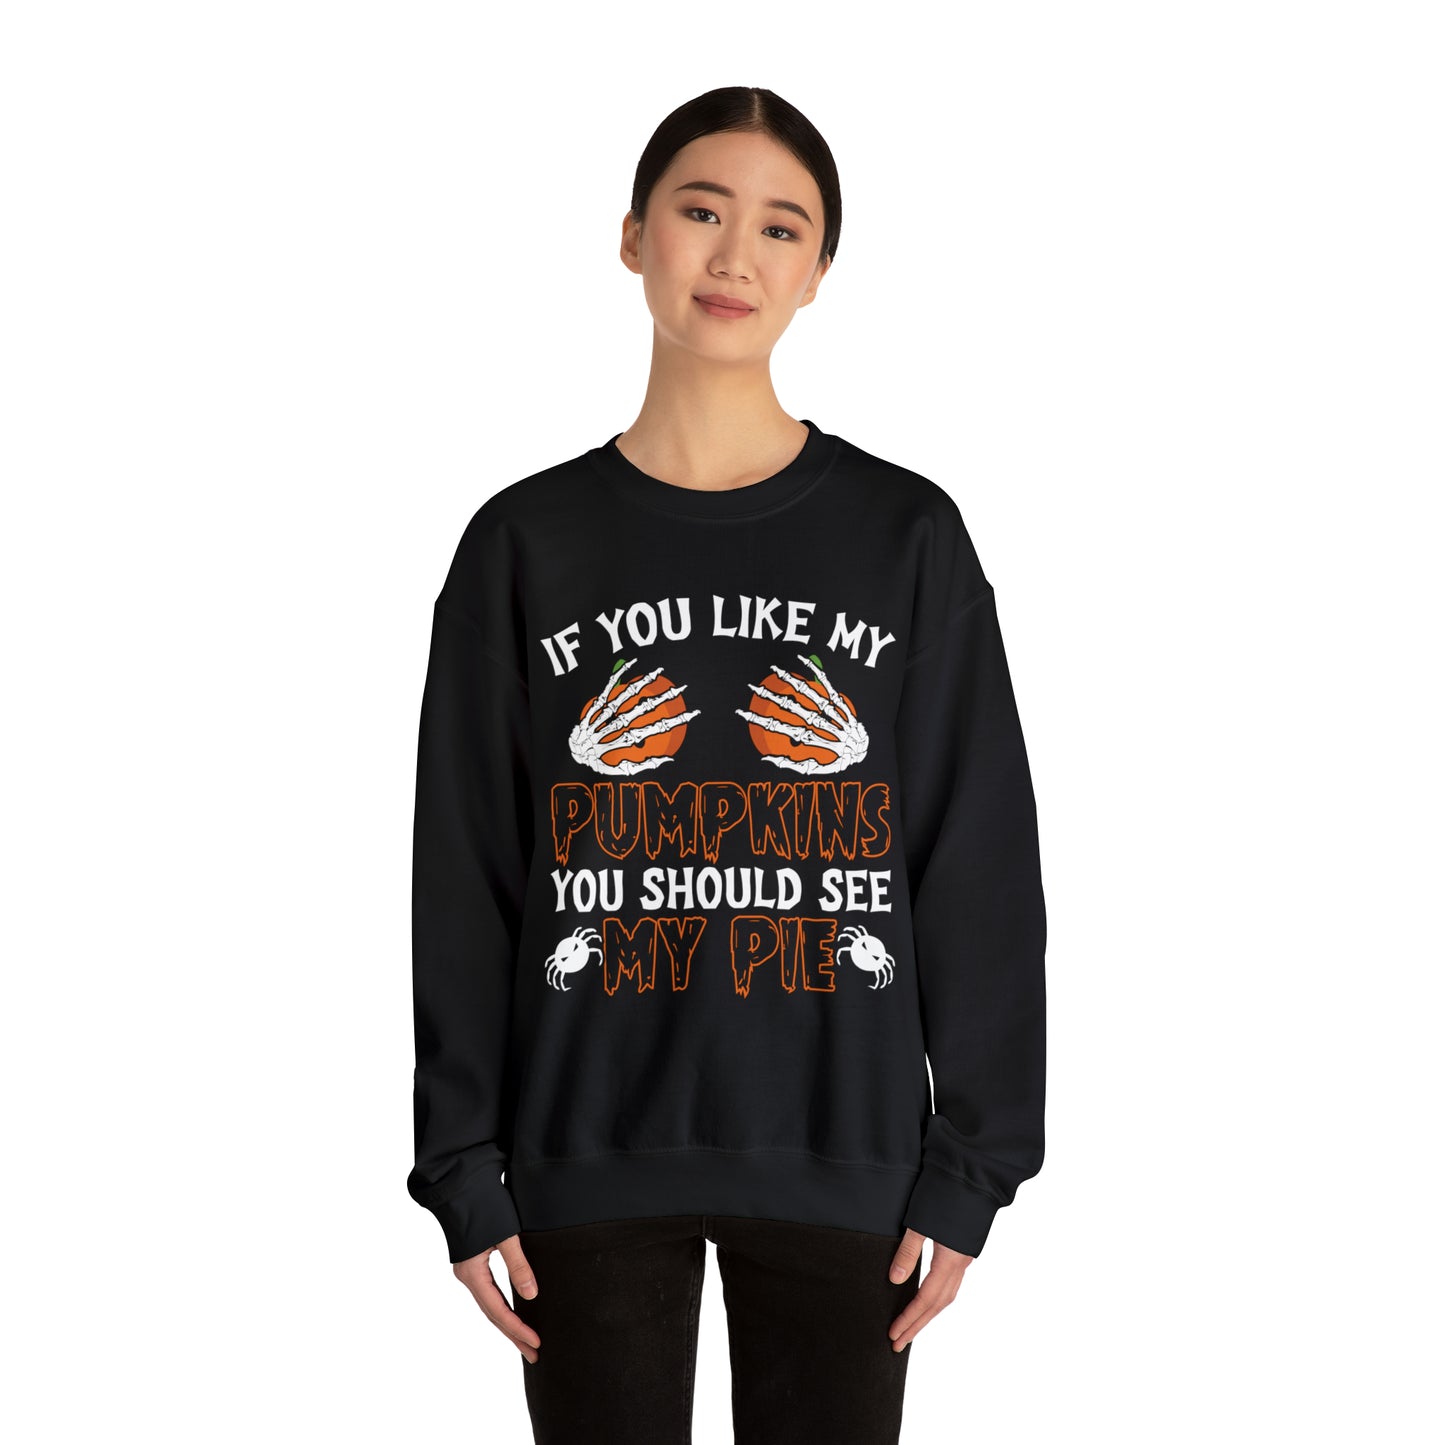 If You Like My Pumpkins Skeleton Hands Crewneck Sweatshirt Top by The Dark Side of Fashion